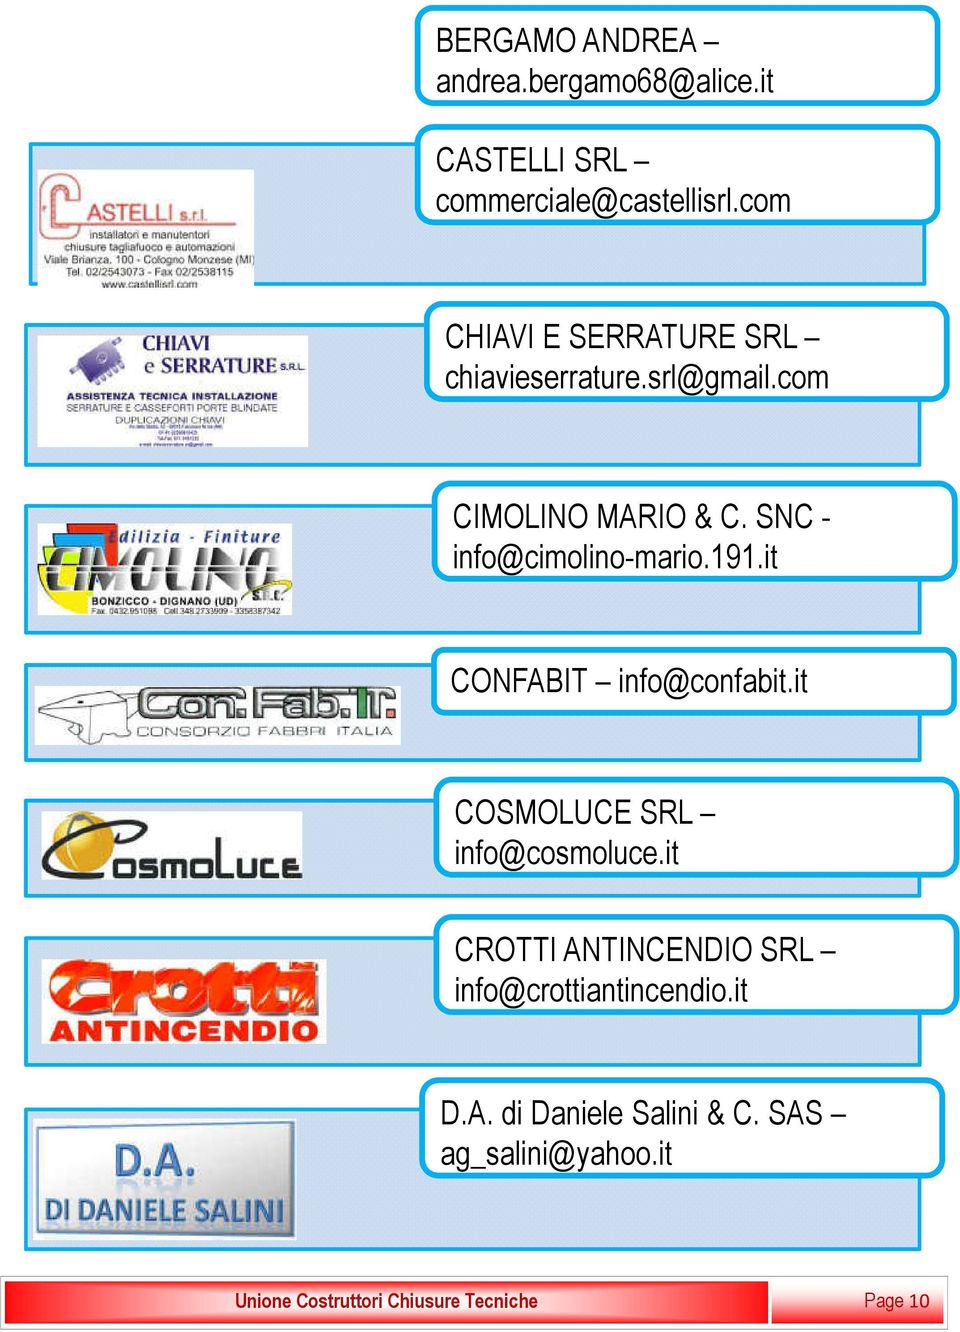 SNC - info@cimolino-mario.191.it CONFABIT info@confabit.it COSMOLUCE SRL info@cosmoluce.